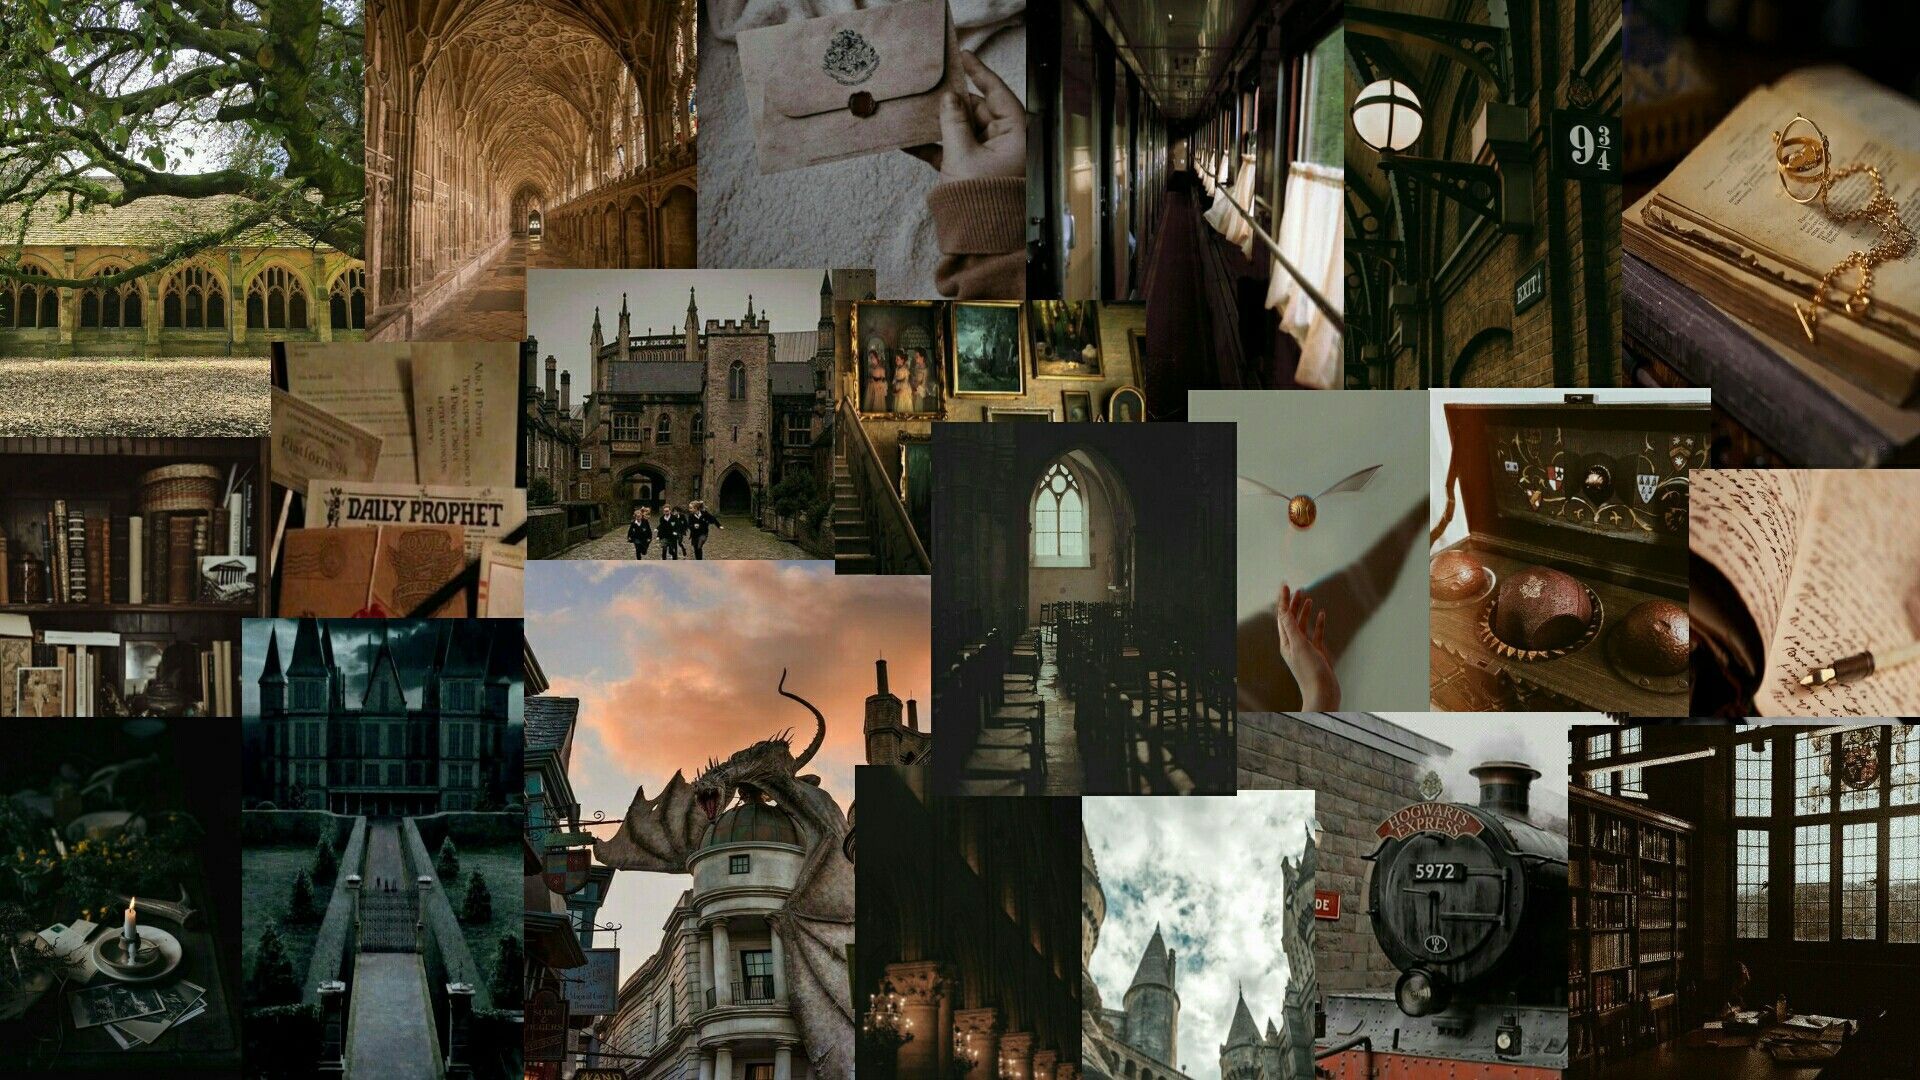 Collage Harry Potter Wallpaper. Harry potter wallpaper, Poster wall, Harry potter aesthetic